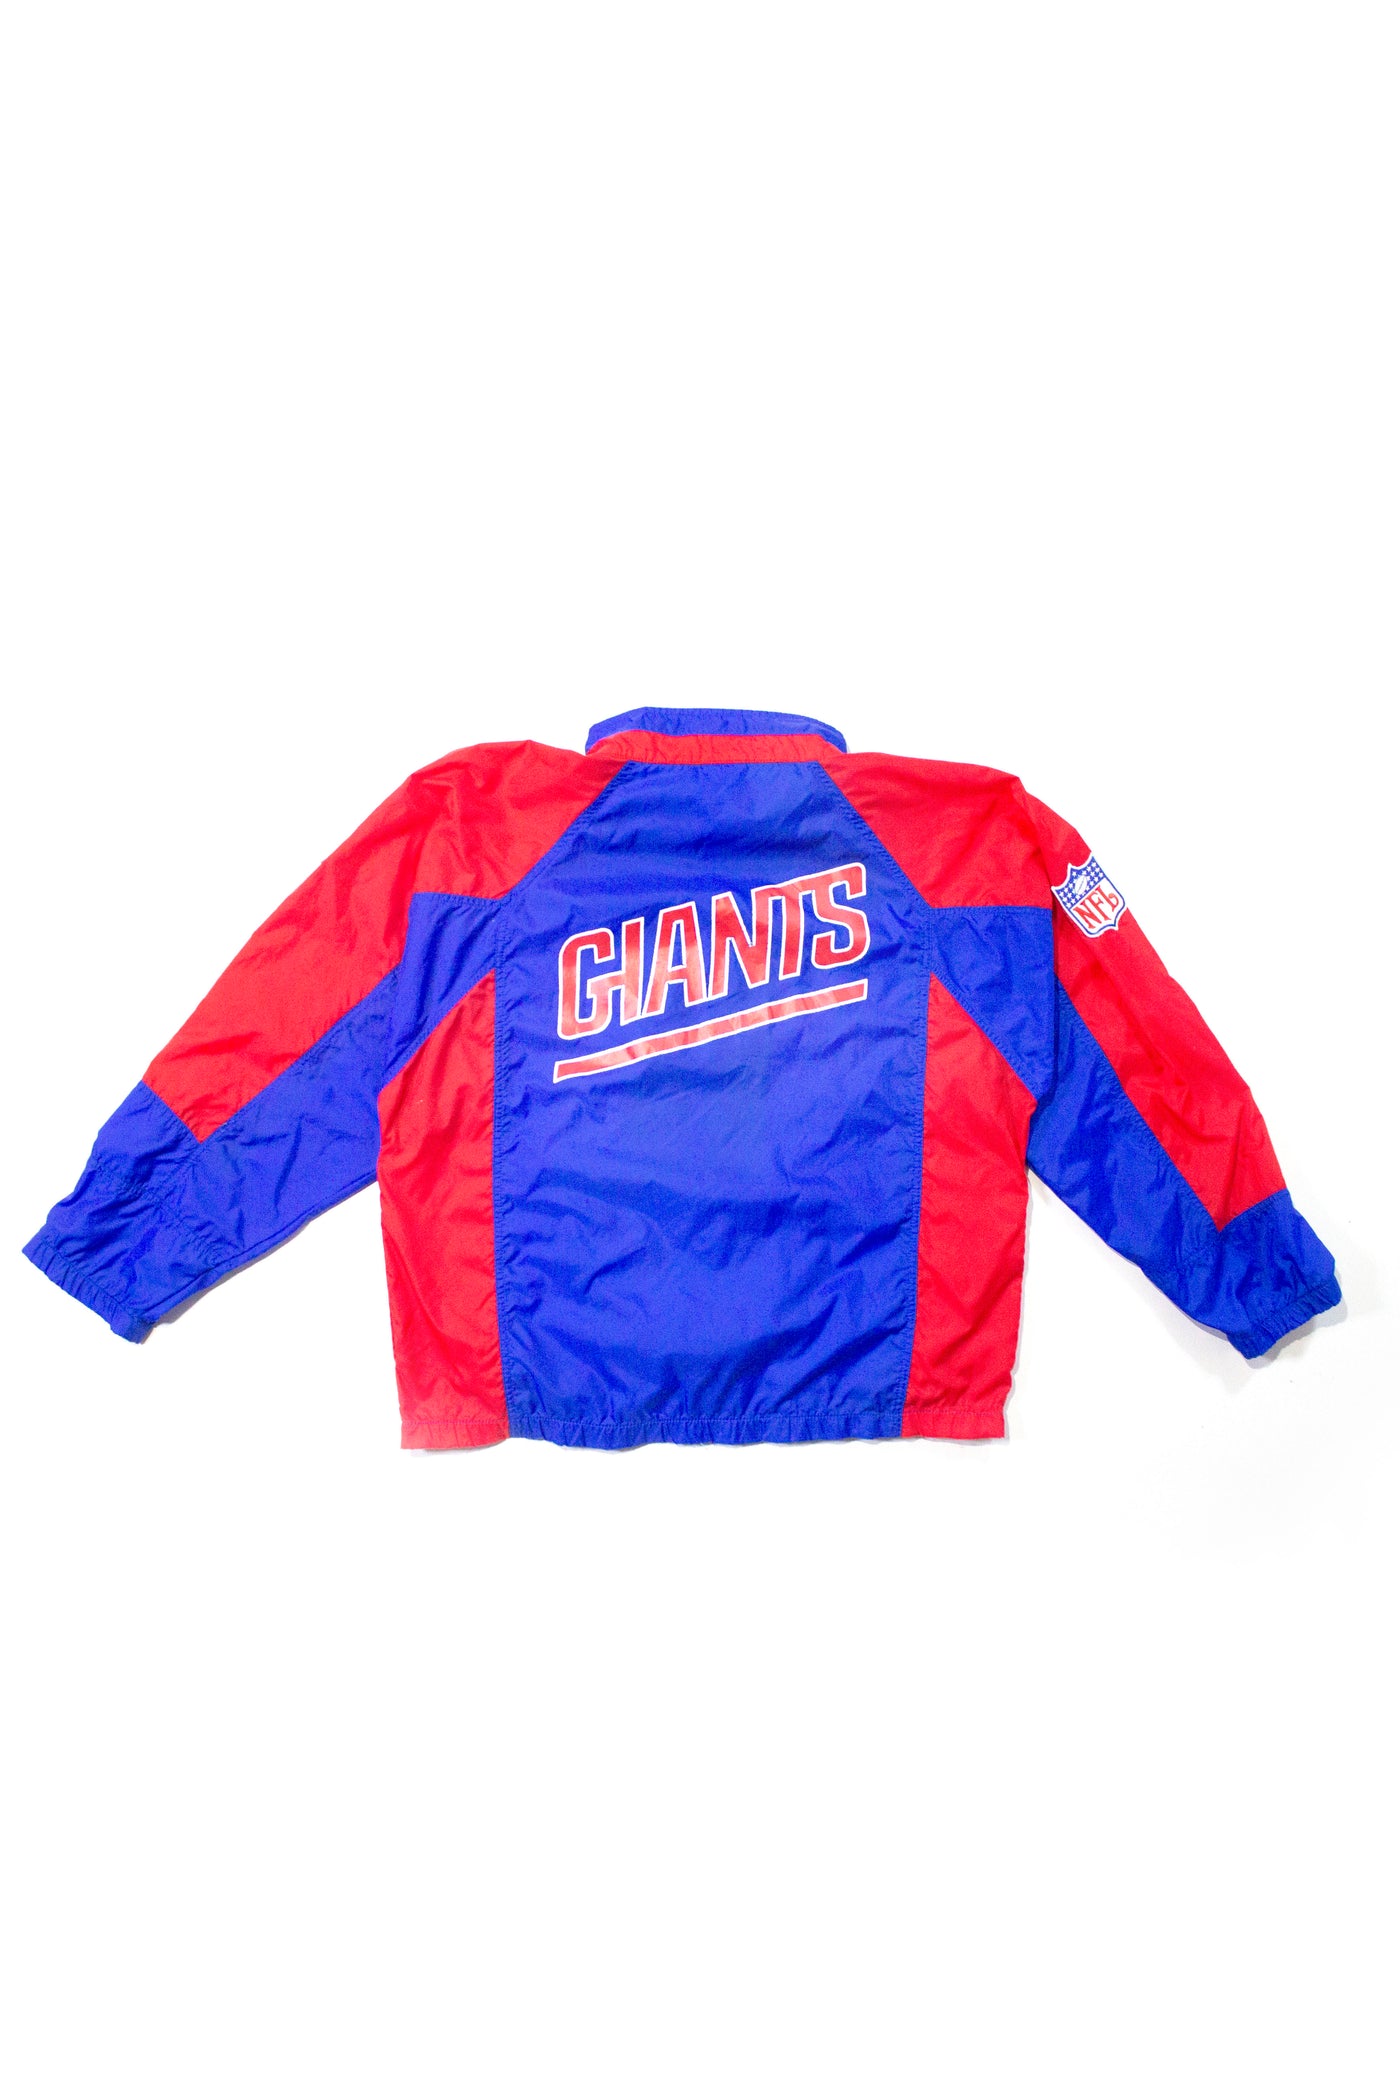 Vintage 90s Apex New York Giants Windbreaker